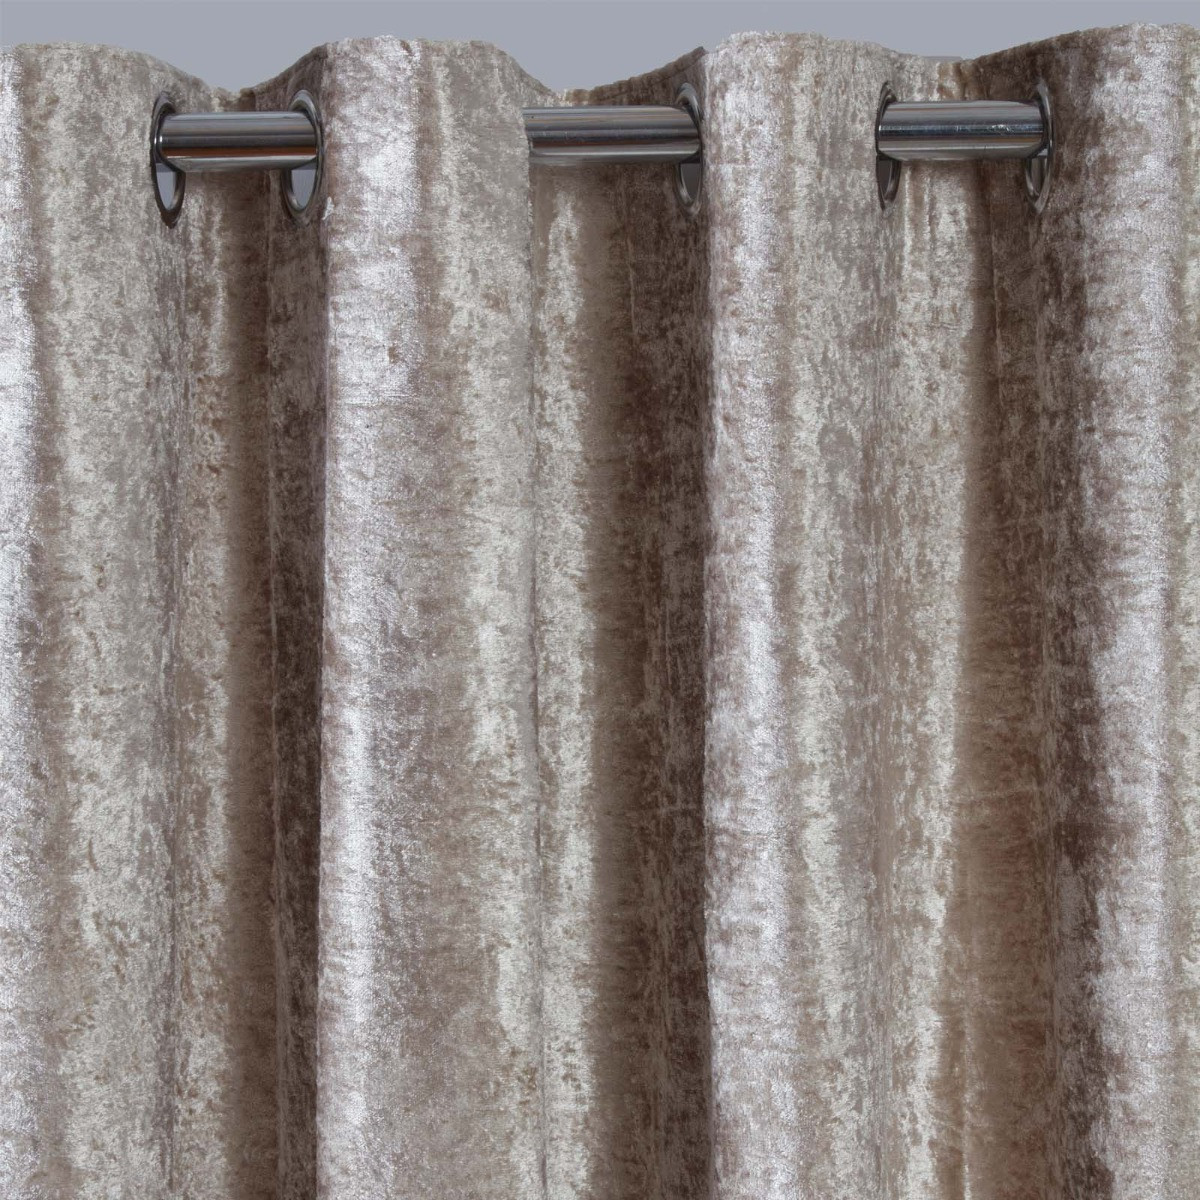 Sienna Eyelet Crushed Velvet Curtains - Natural>